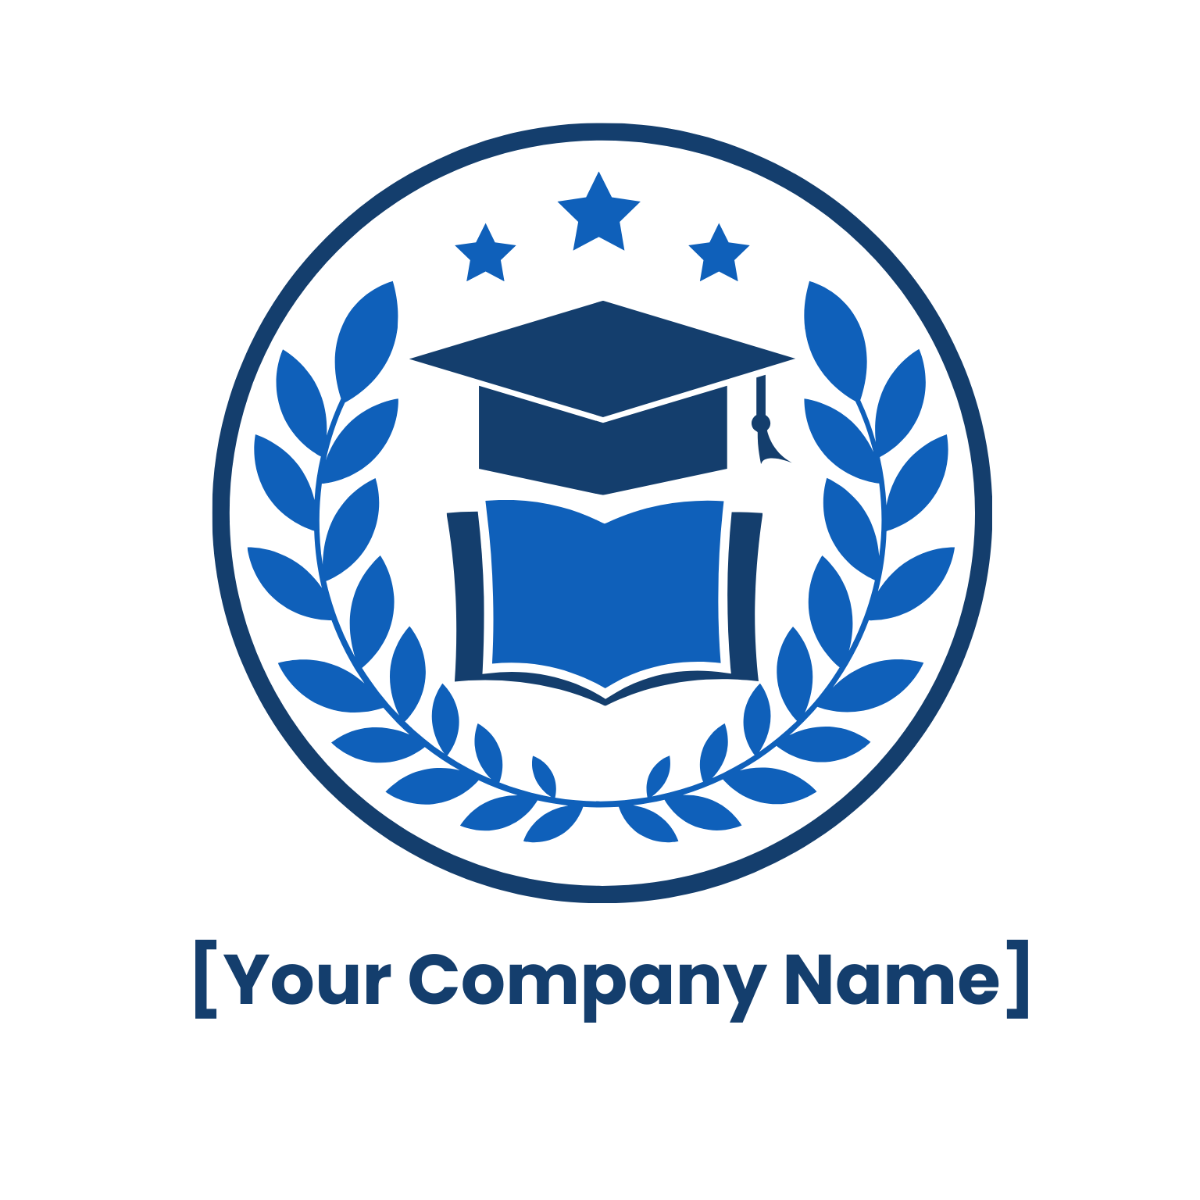 College Education Logo